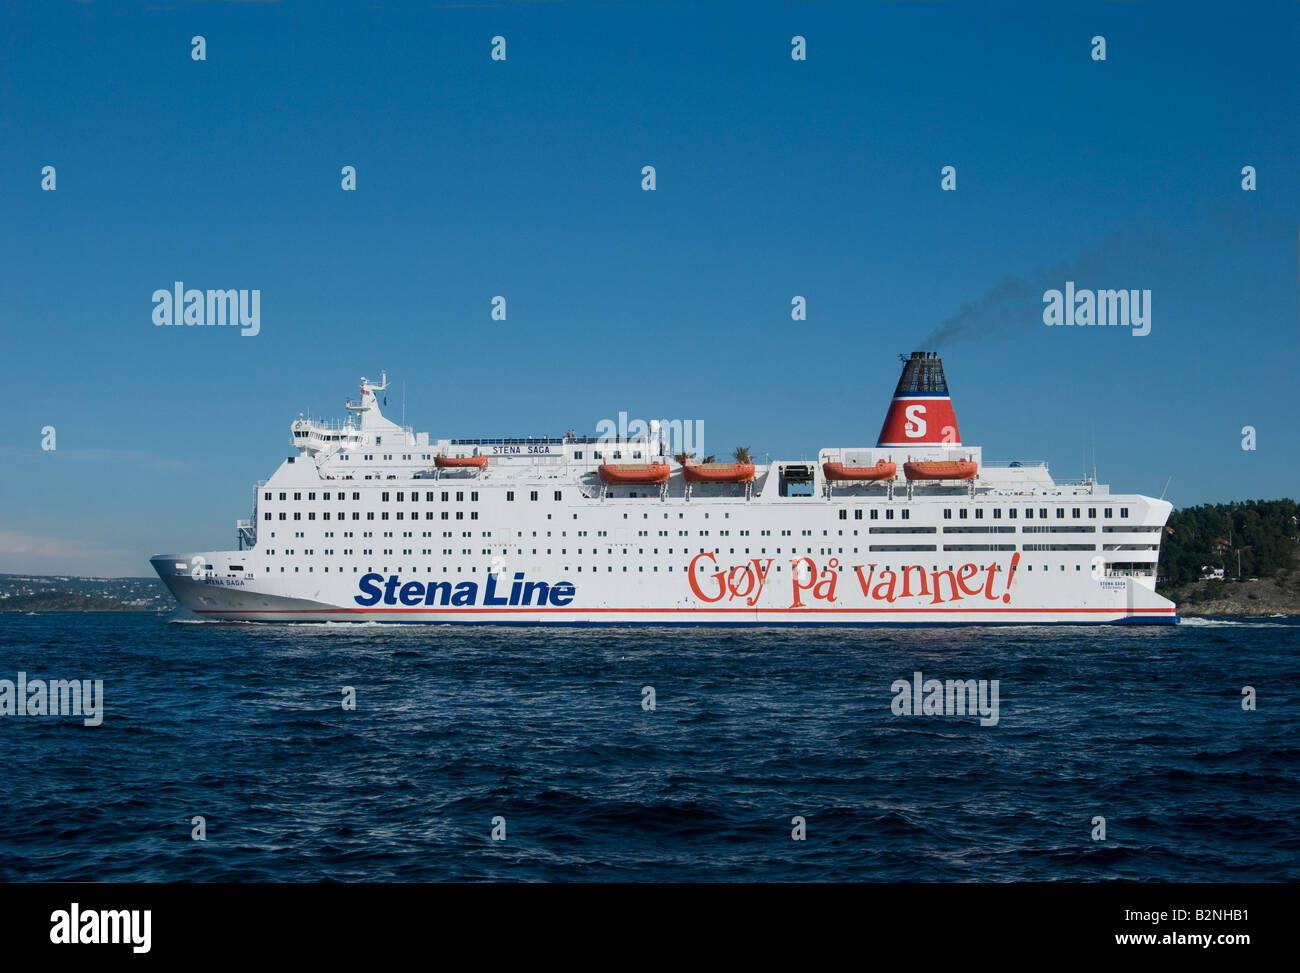 The Swedish car ferry Stena Saga of Stena Line on its way to Oslo Stock Photo